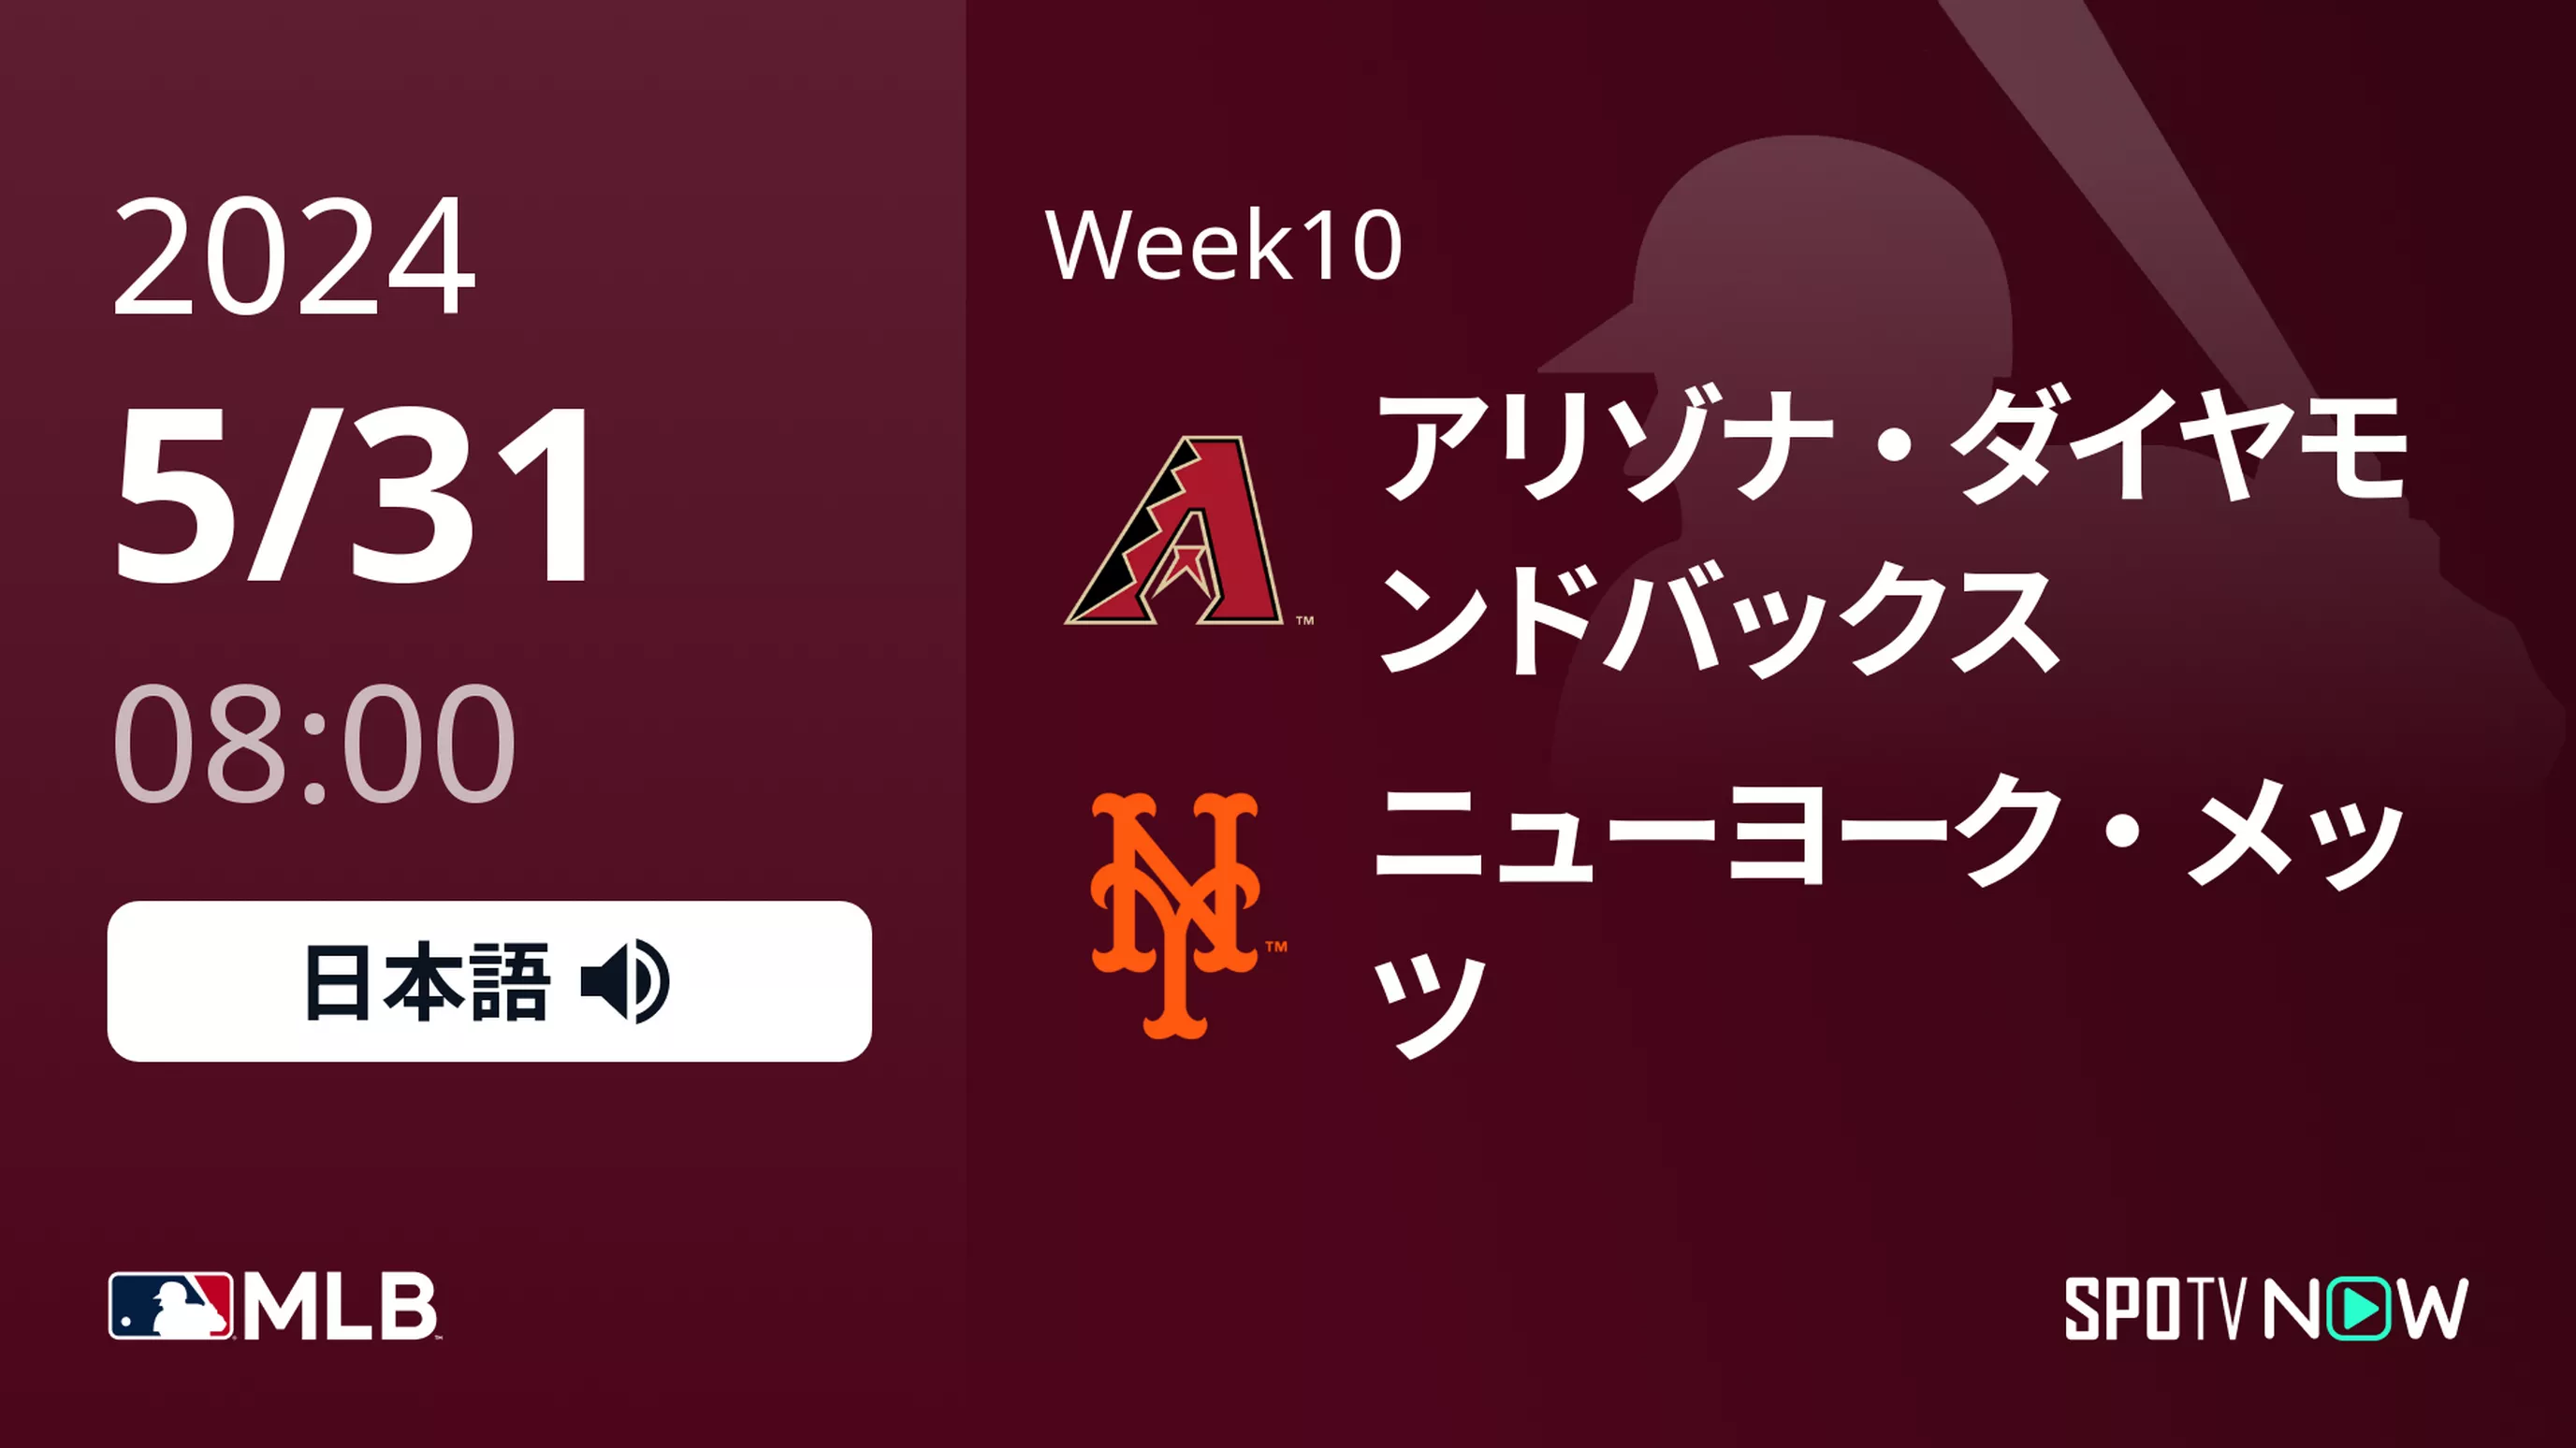 Week10 Dバックス vs メッツ 5/31[MLB]